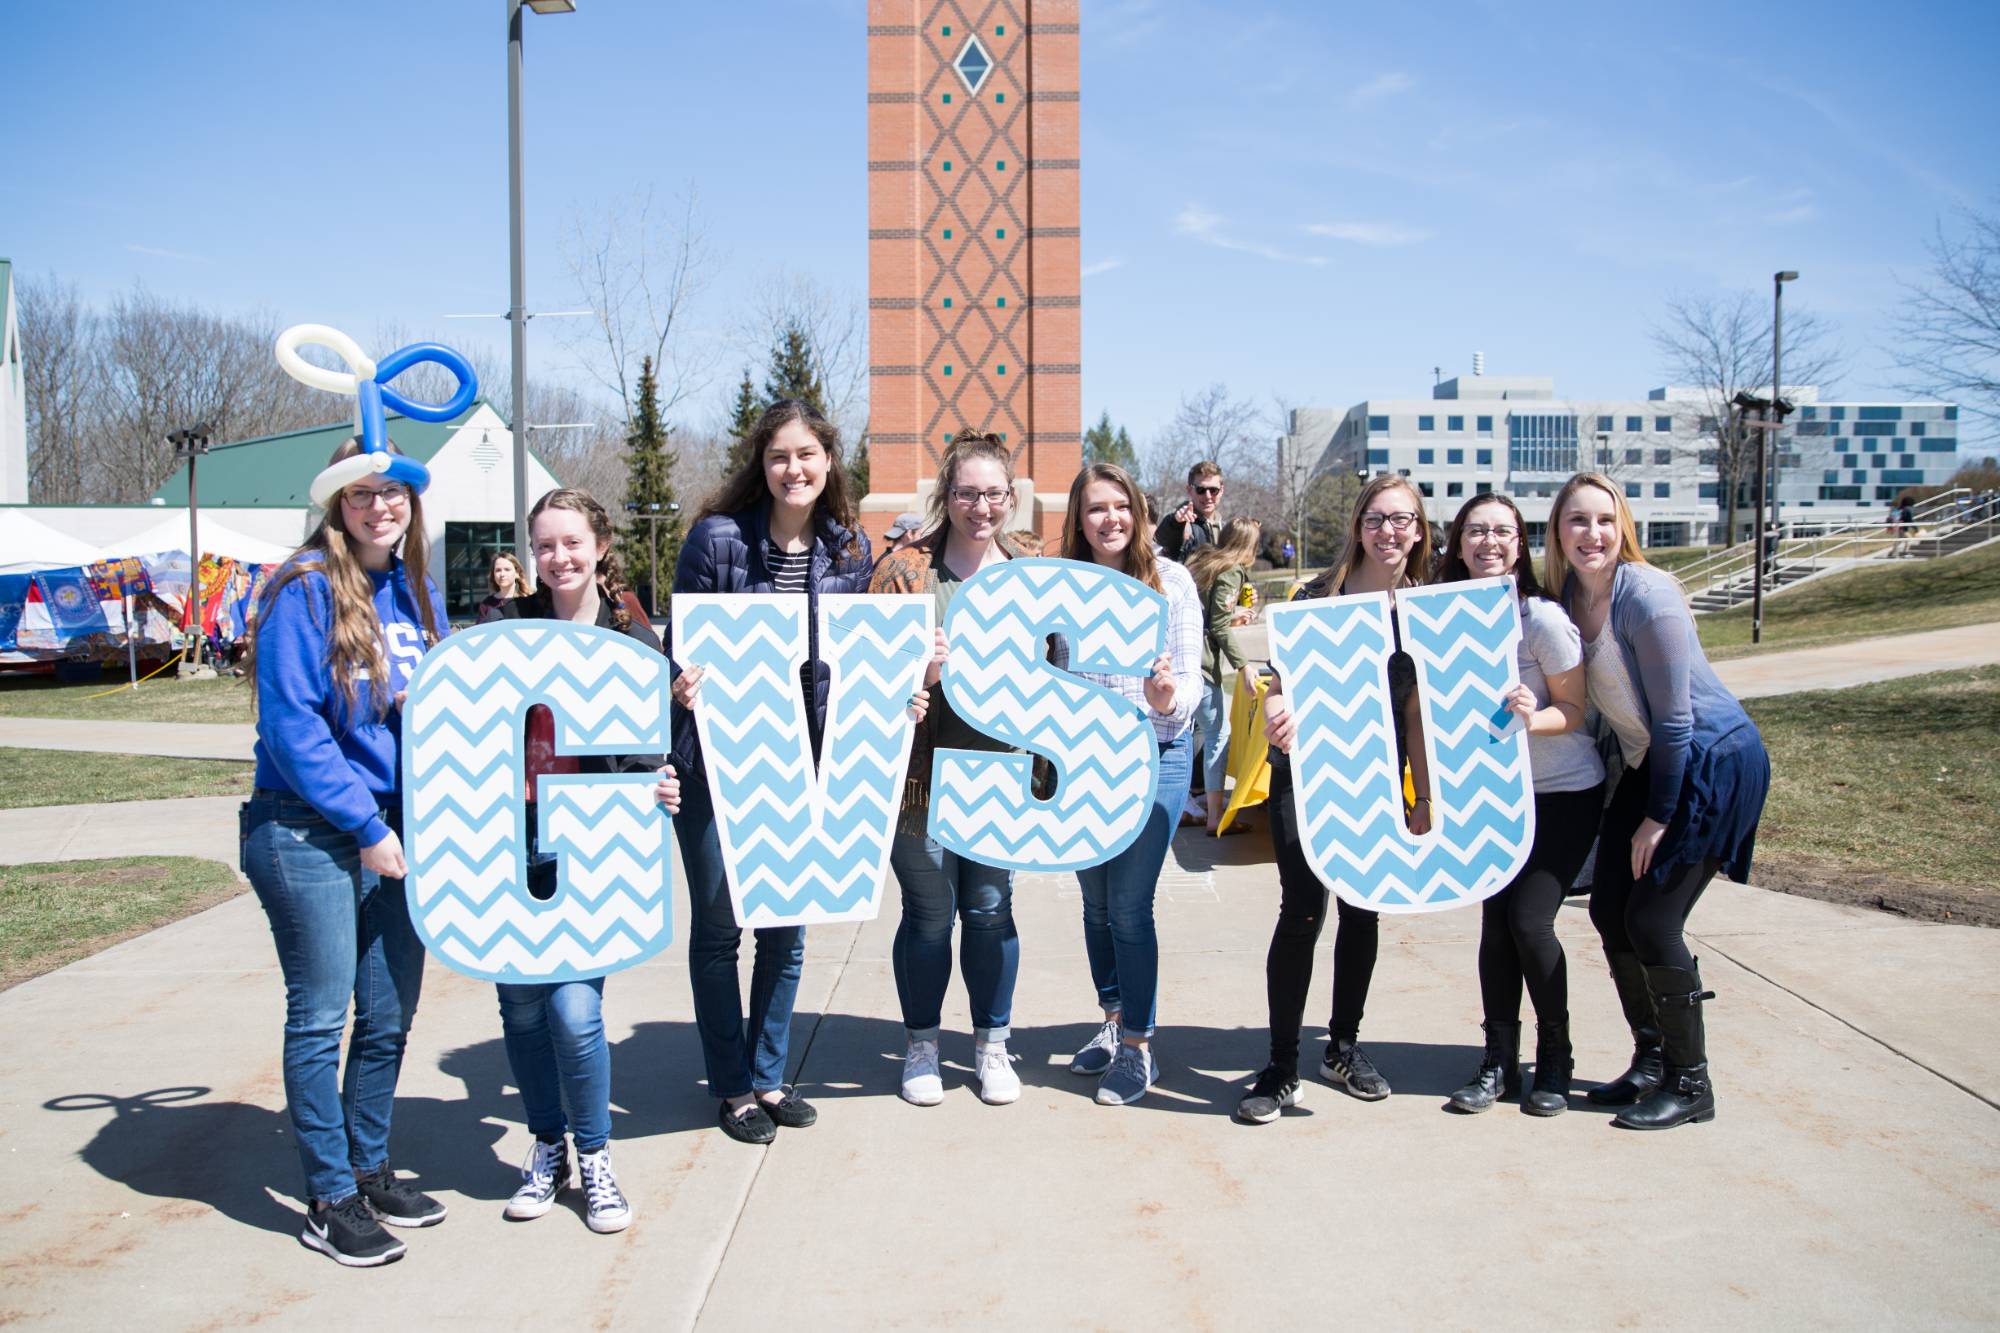 8 GVSU students holding a letters that spell "GVSU" at Lakerpalooza